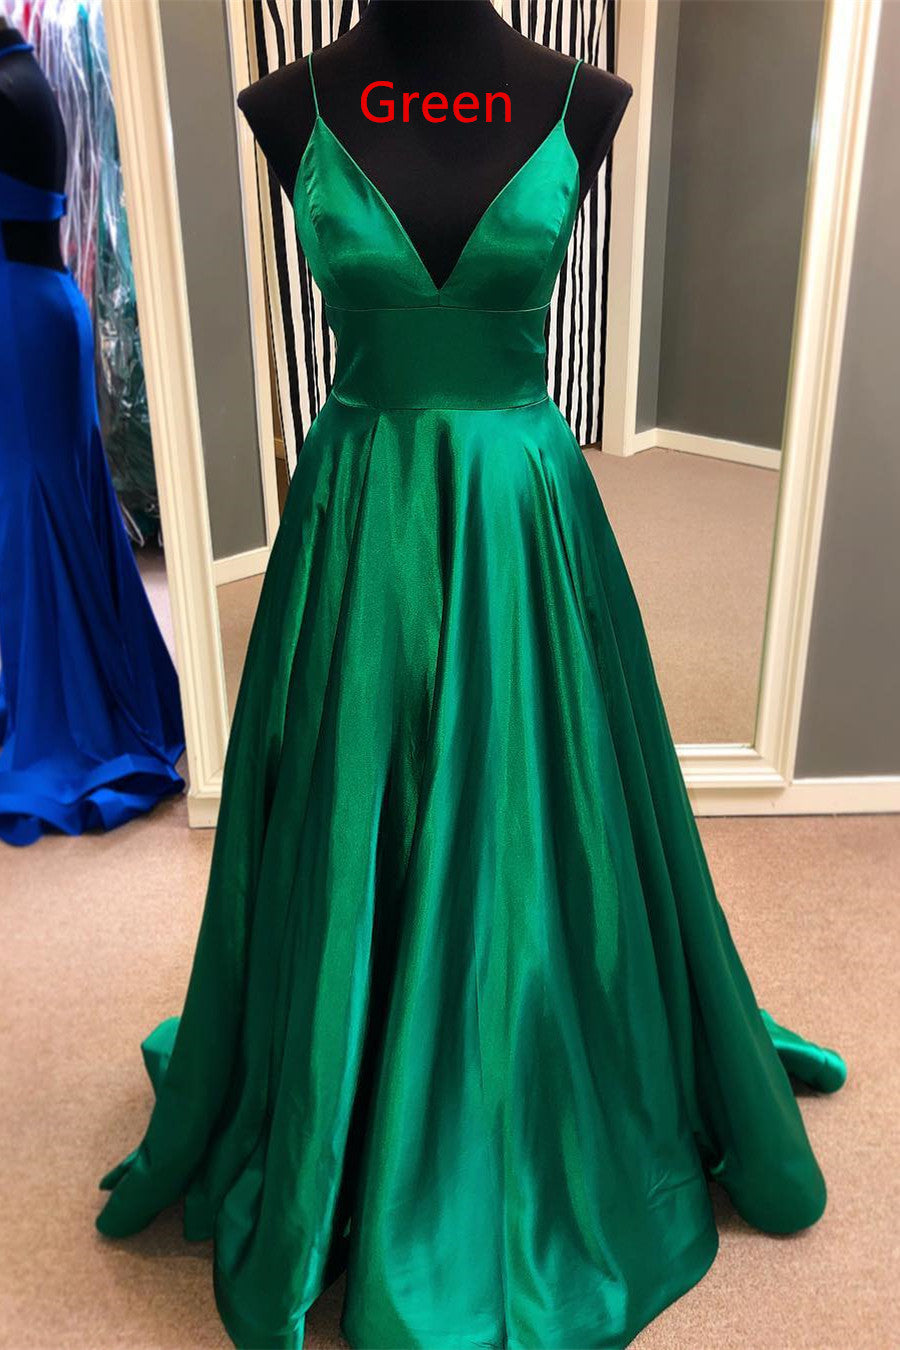 Green Prom Dress Long V Neckline, Ball Gown, Dresses For Party, Evening Dress, Formal Dress